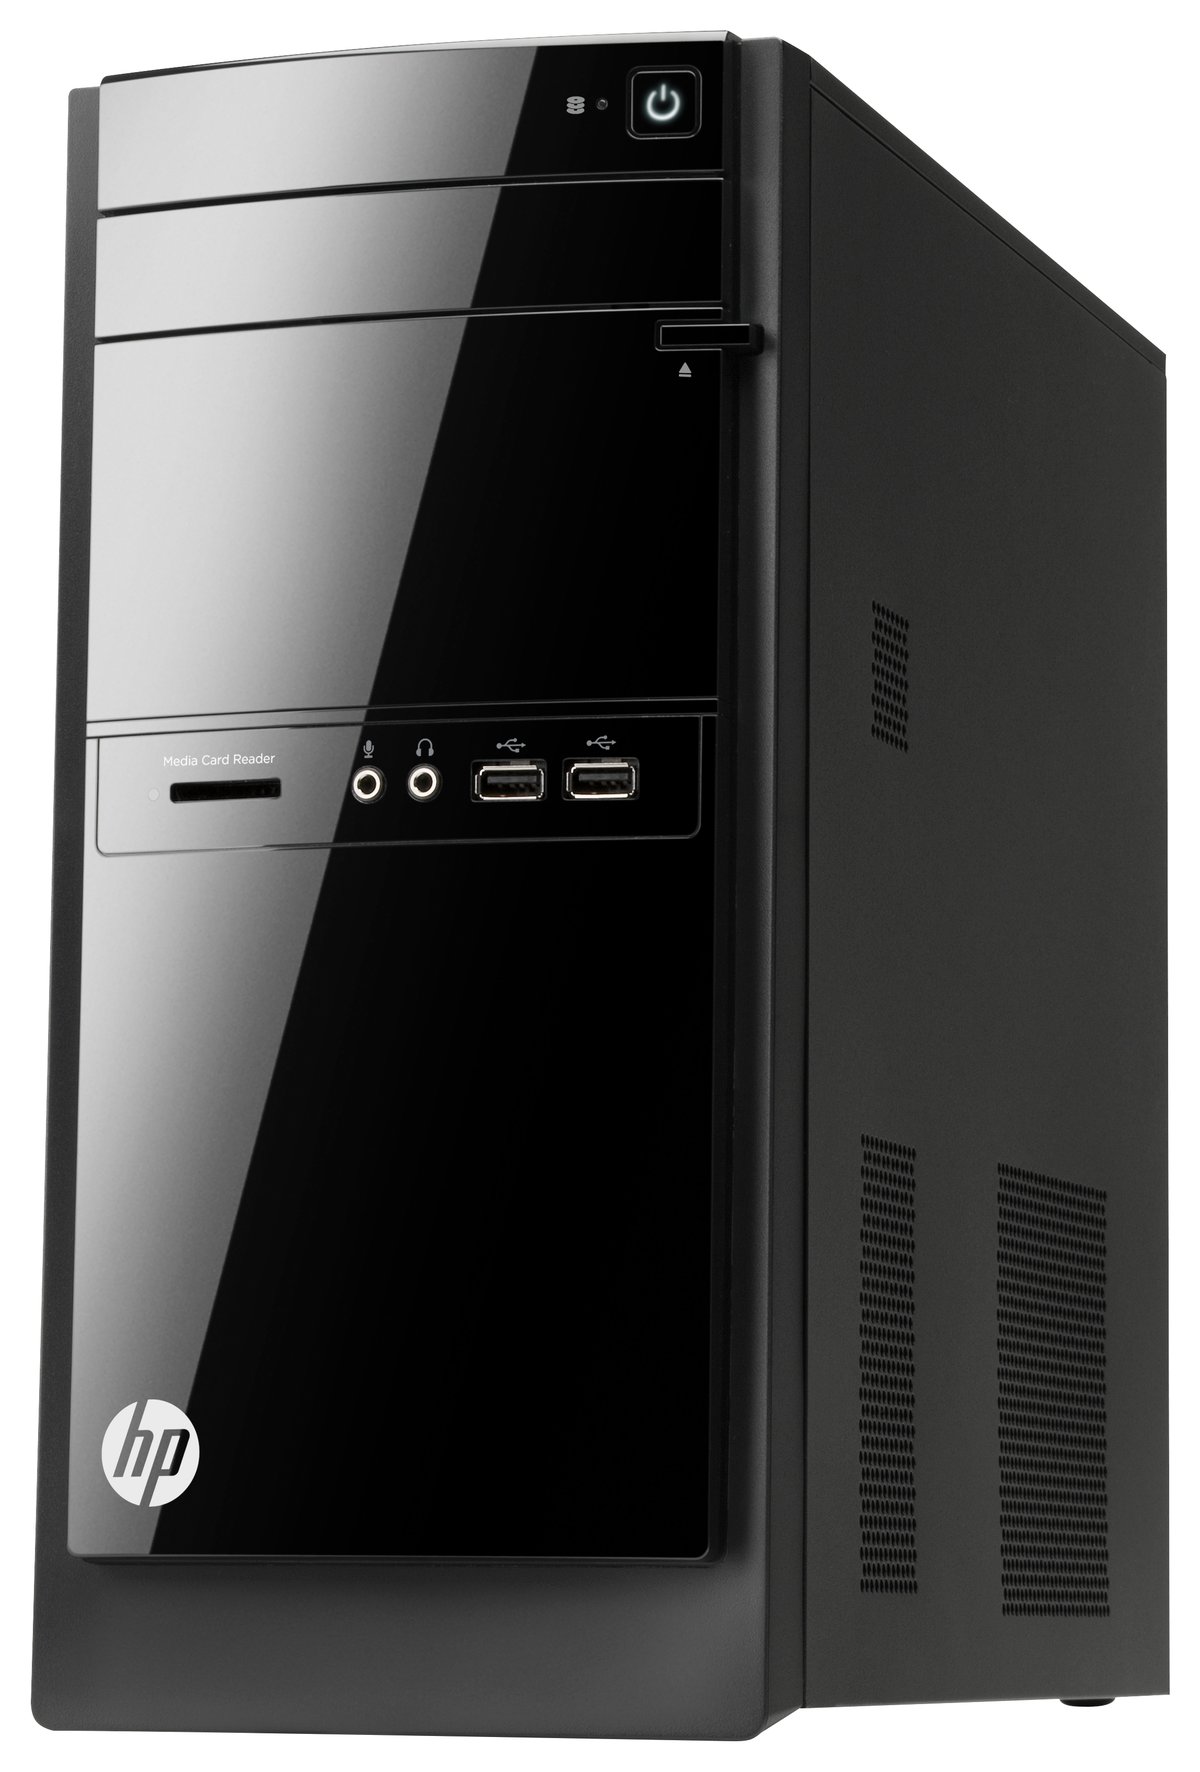 HP 110-210 Desktop Computer, AMD A4-5000, 4GB Memory, 500GB Hard Drive -  Sam's Club